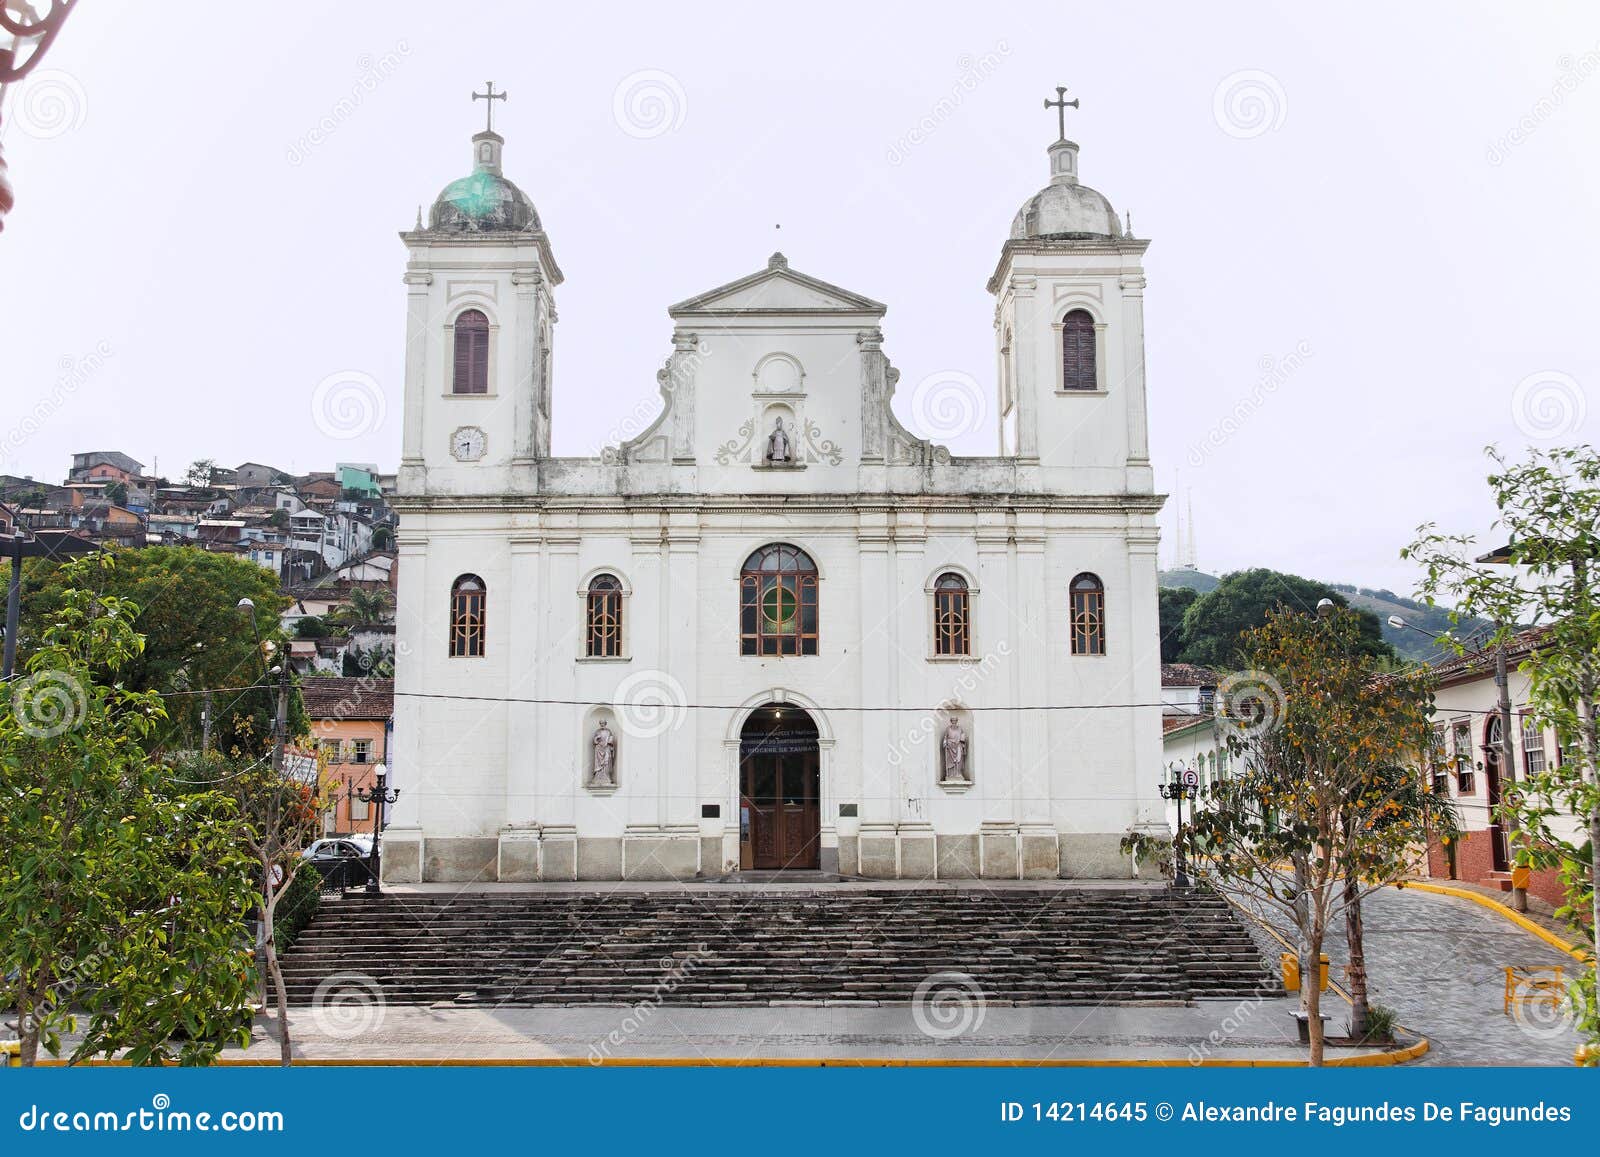 church matriz de sao luis do paraitinga